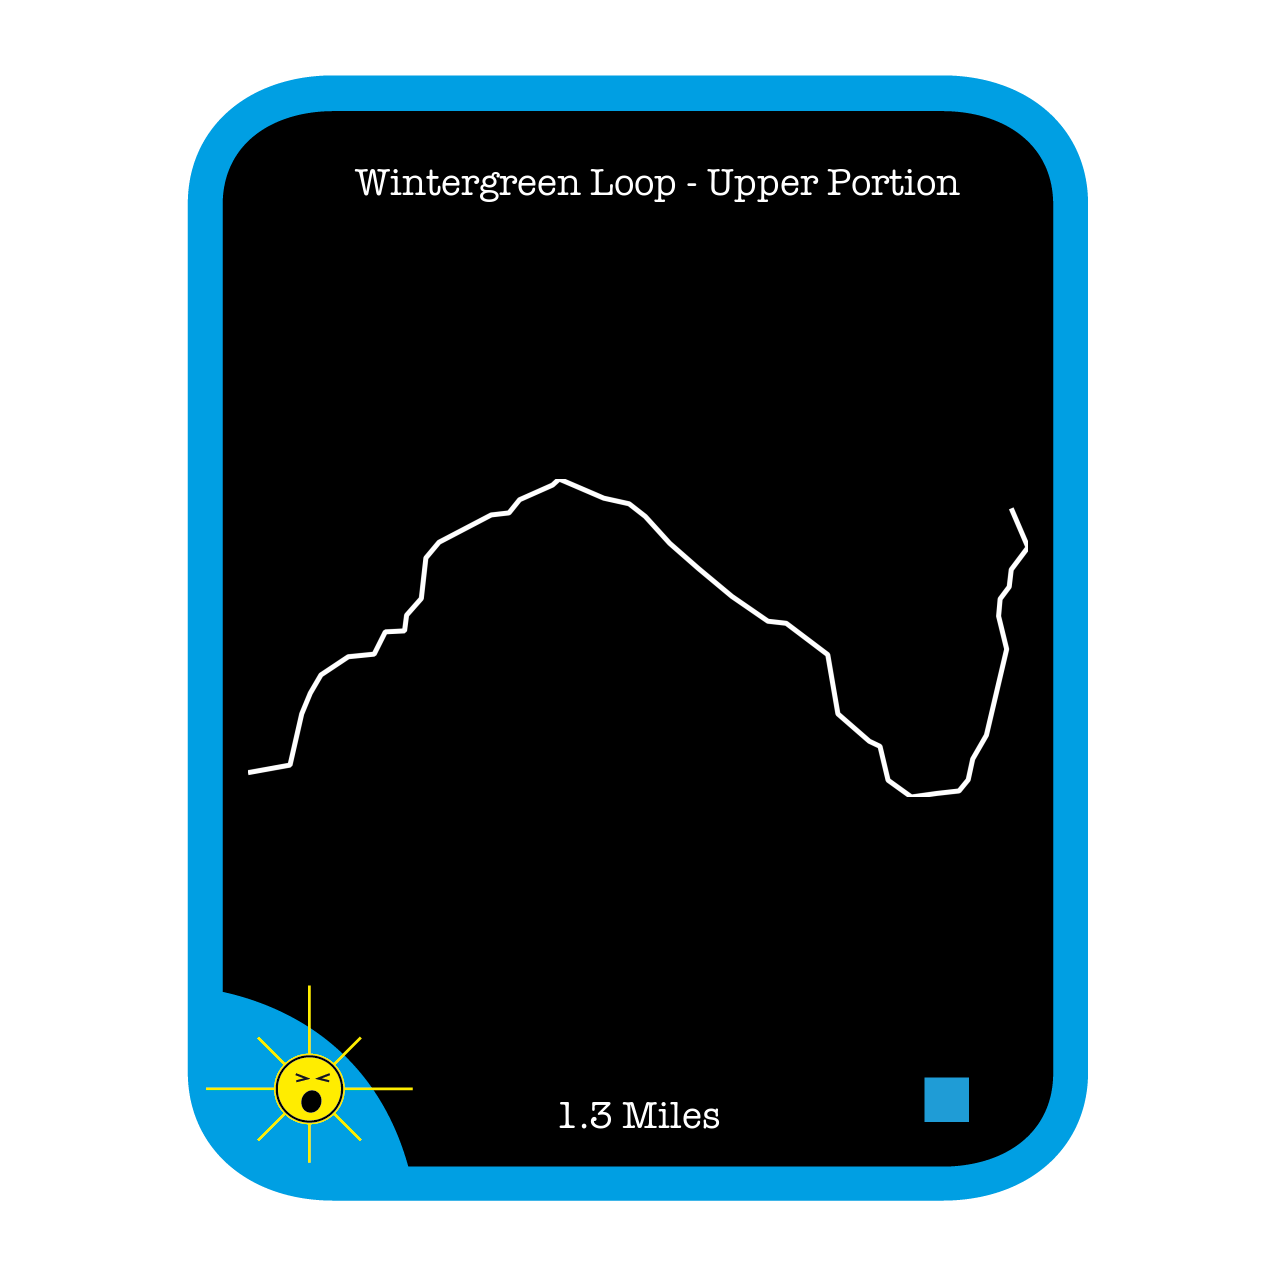 Wintergreen Loop - Upper Portion